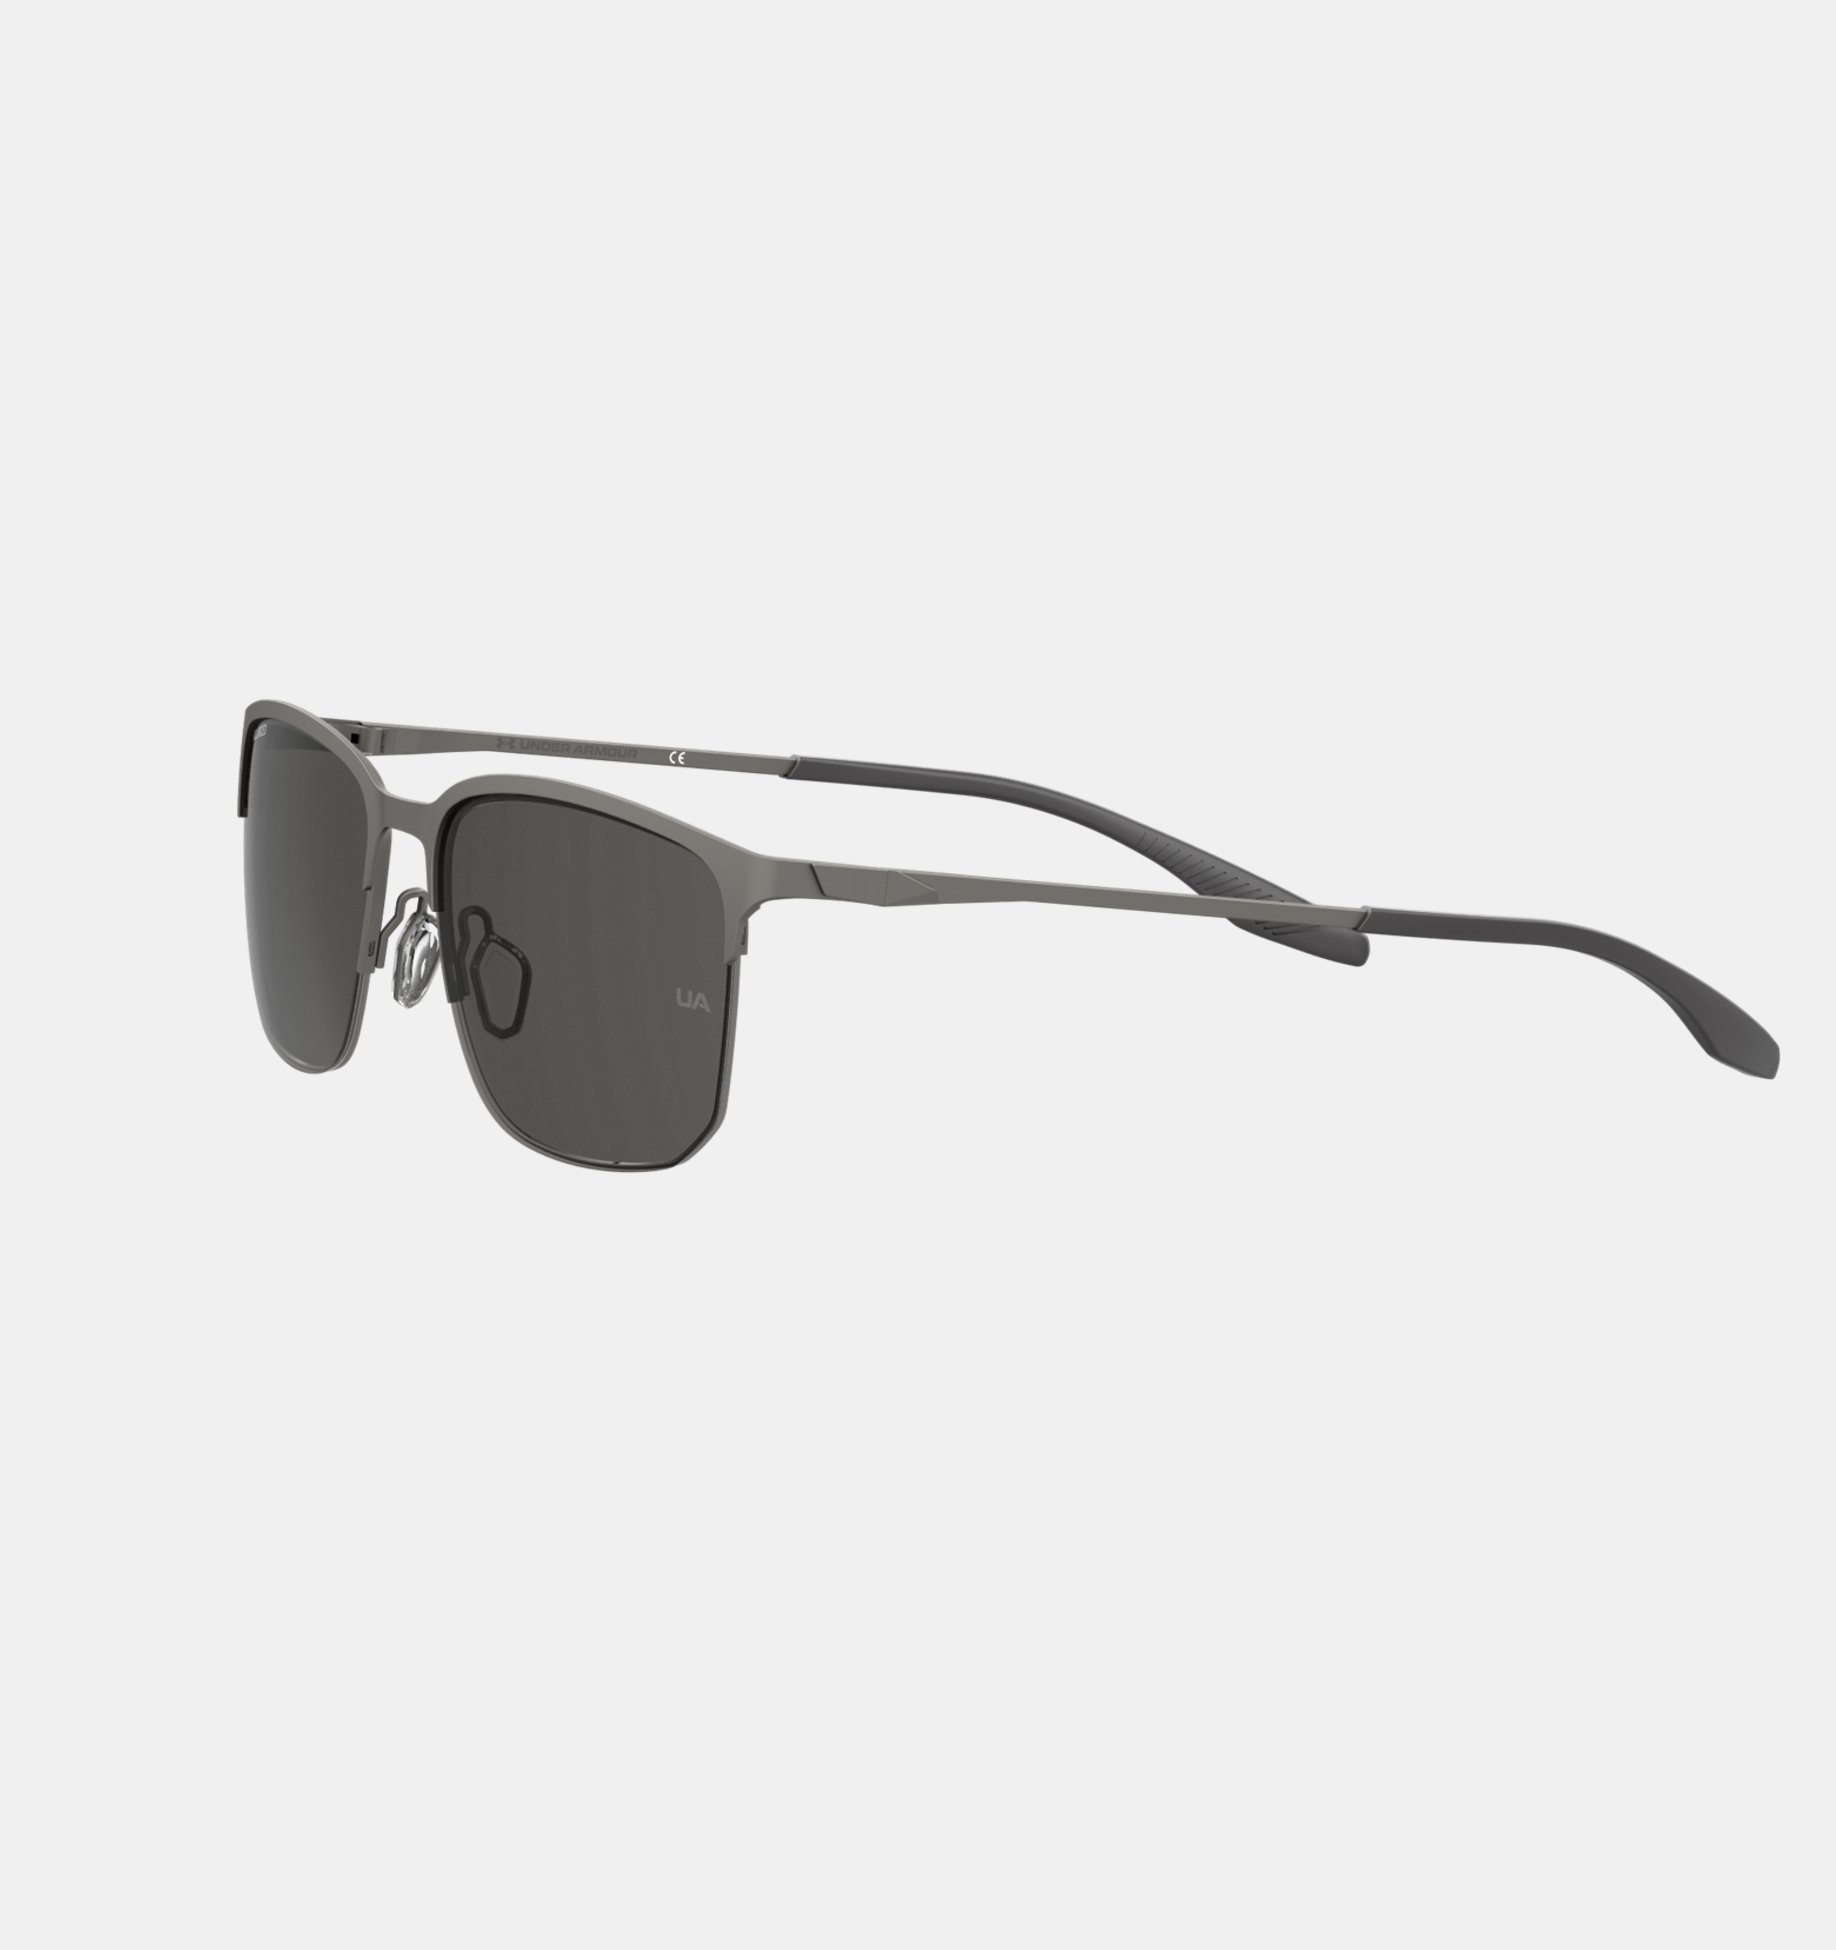 Men's UA Streak Polarized Sunglasses